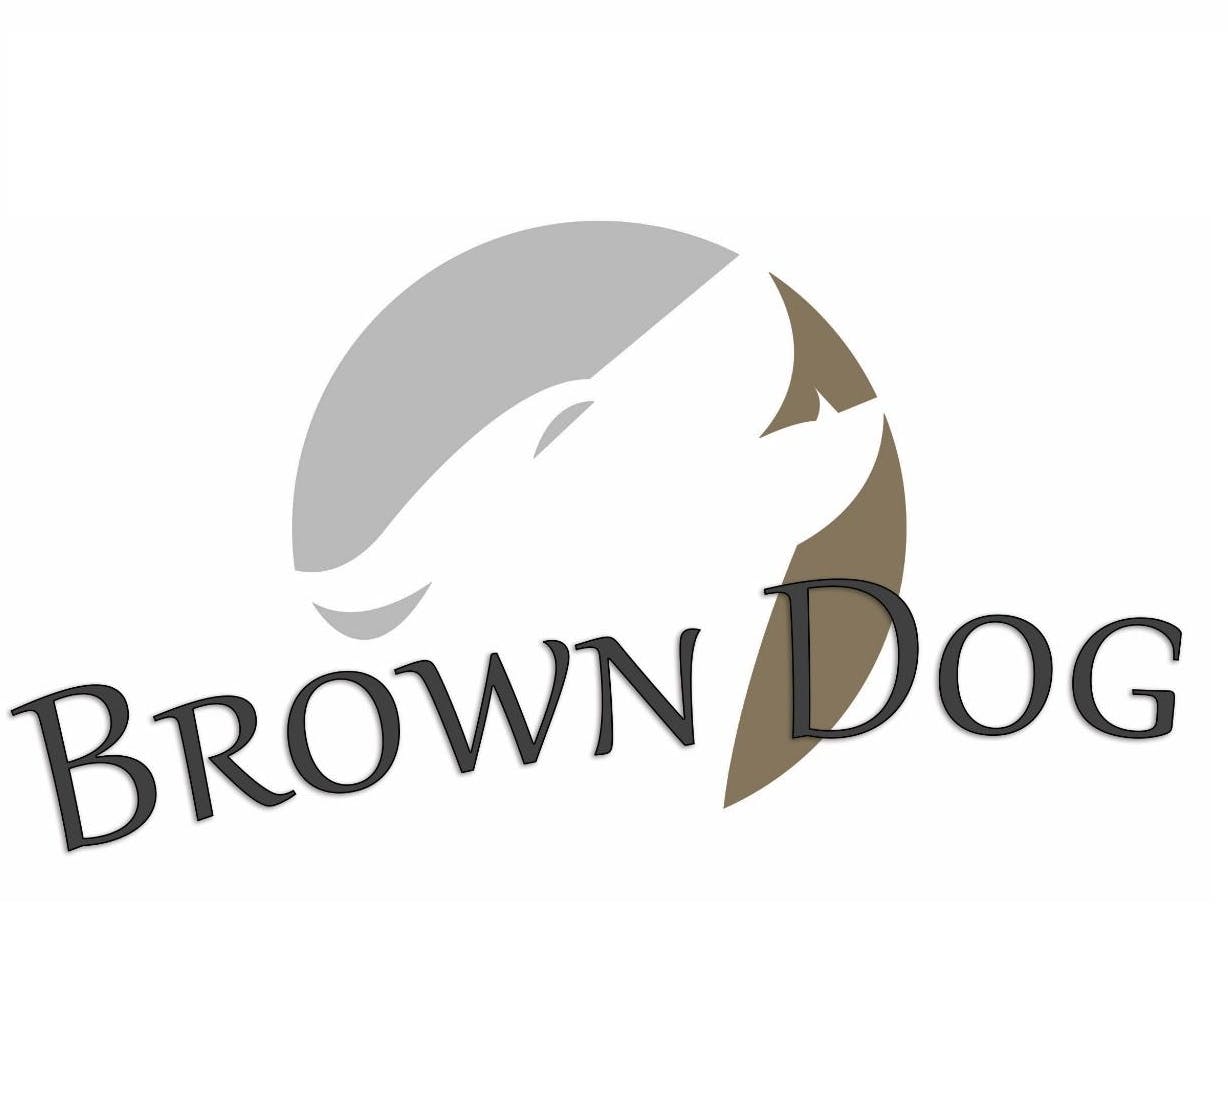 Brown Dog Health and Wellness - Medical Marijuana Doctors - Cannabizme.com